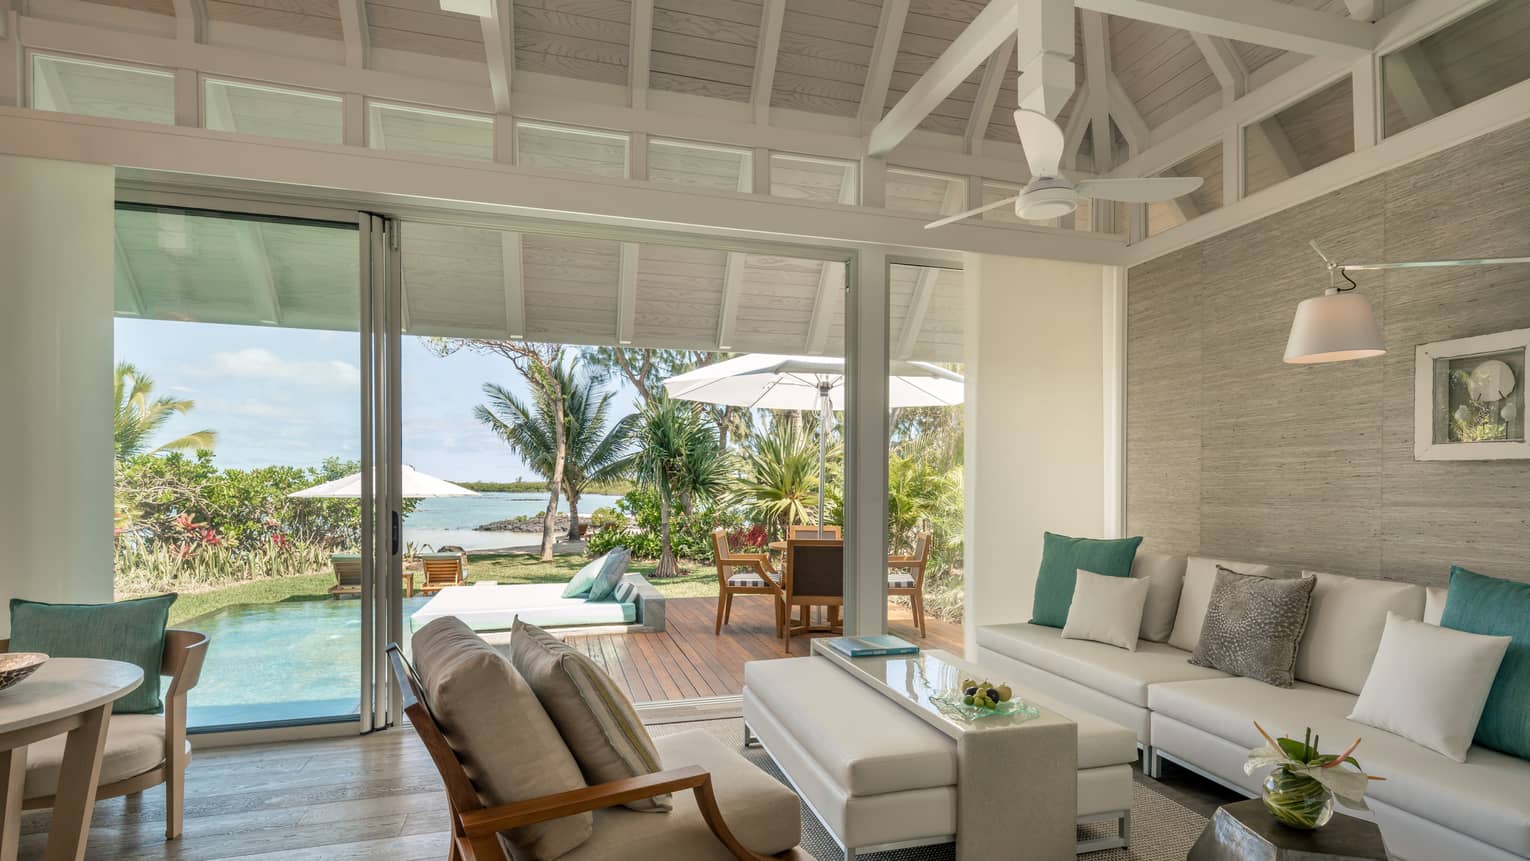 Sanctuary Beach Pool Villa with long white sofa, ottoman, chair, open glass wall to patio